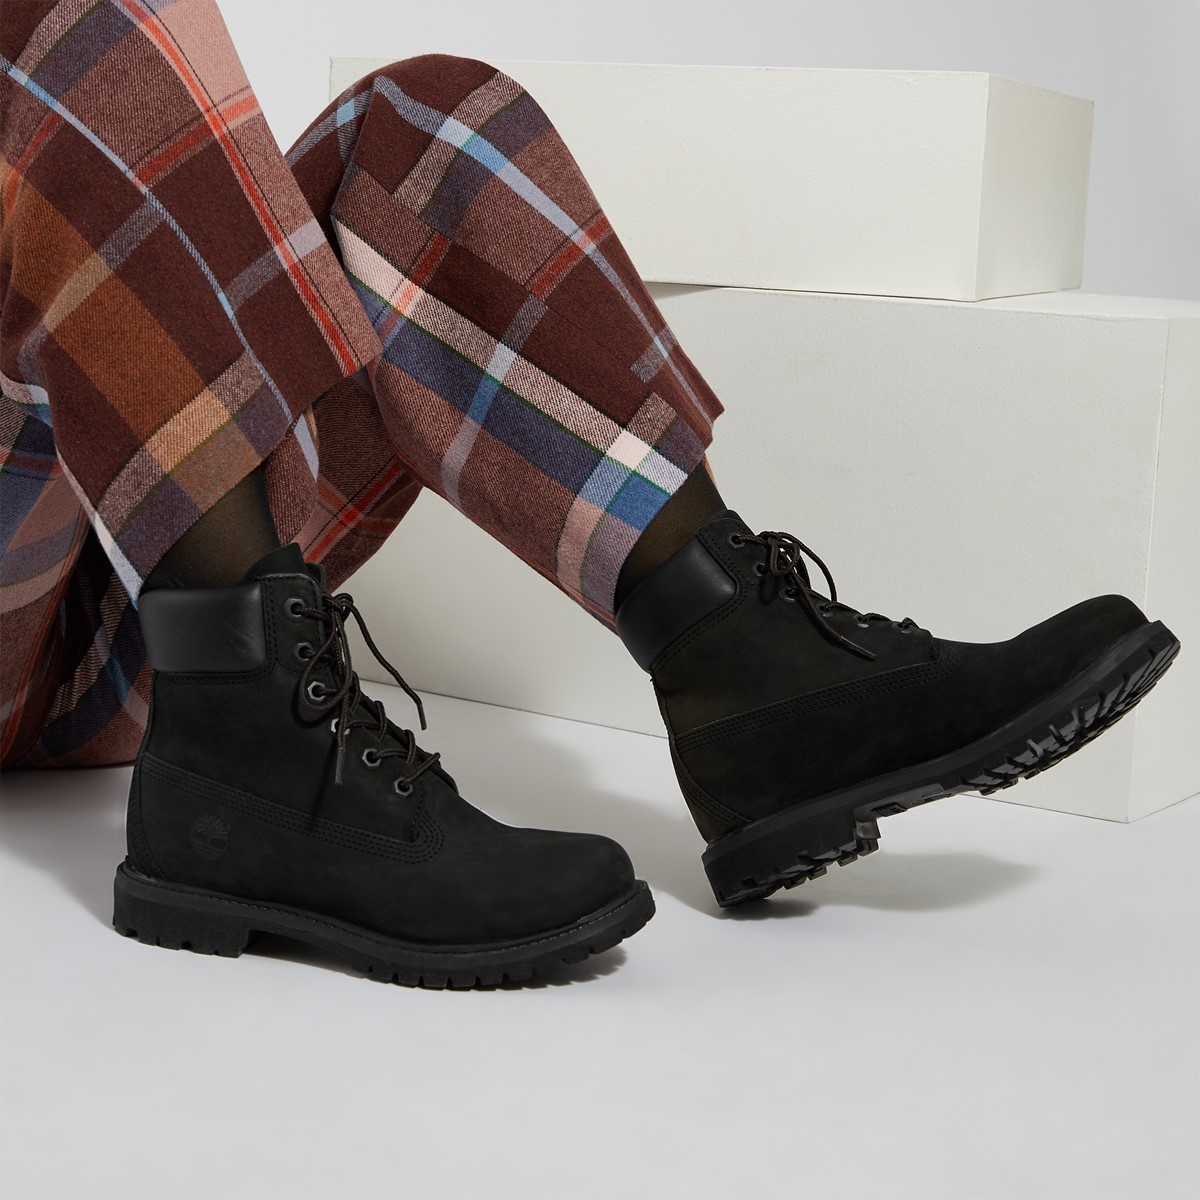 premium 6 inch boot for women in black